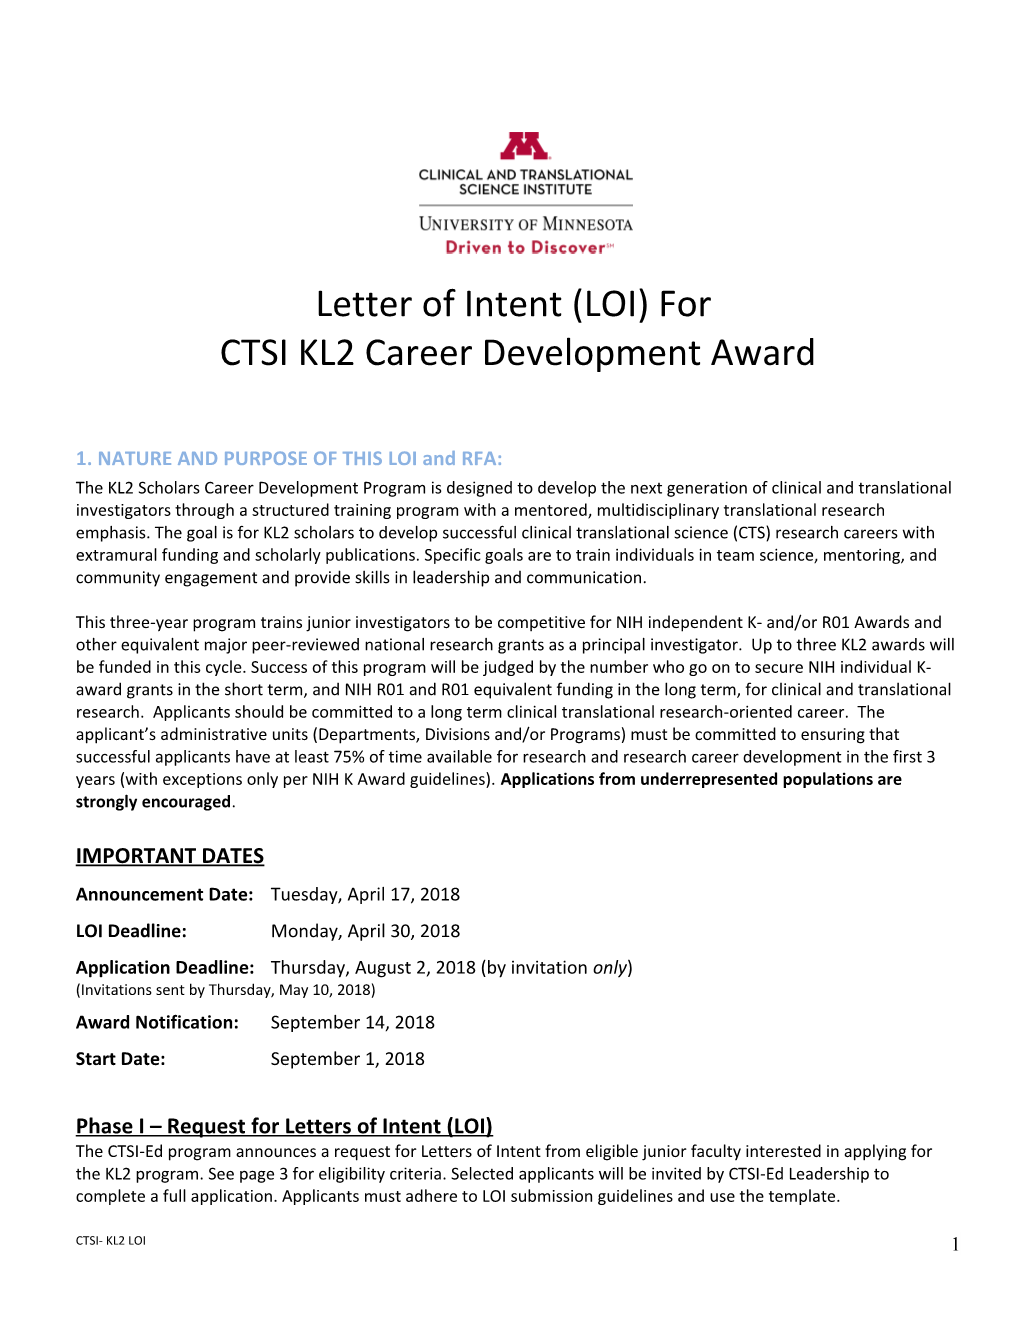 CTSI Scholar Application Instructions